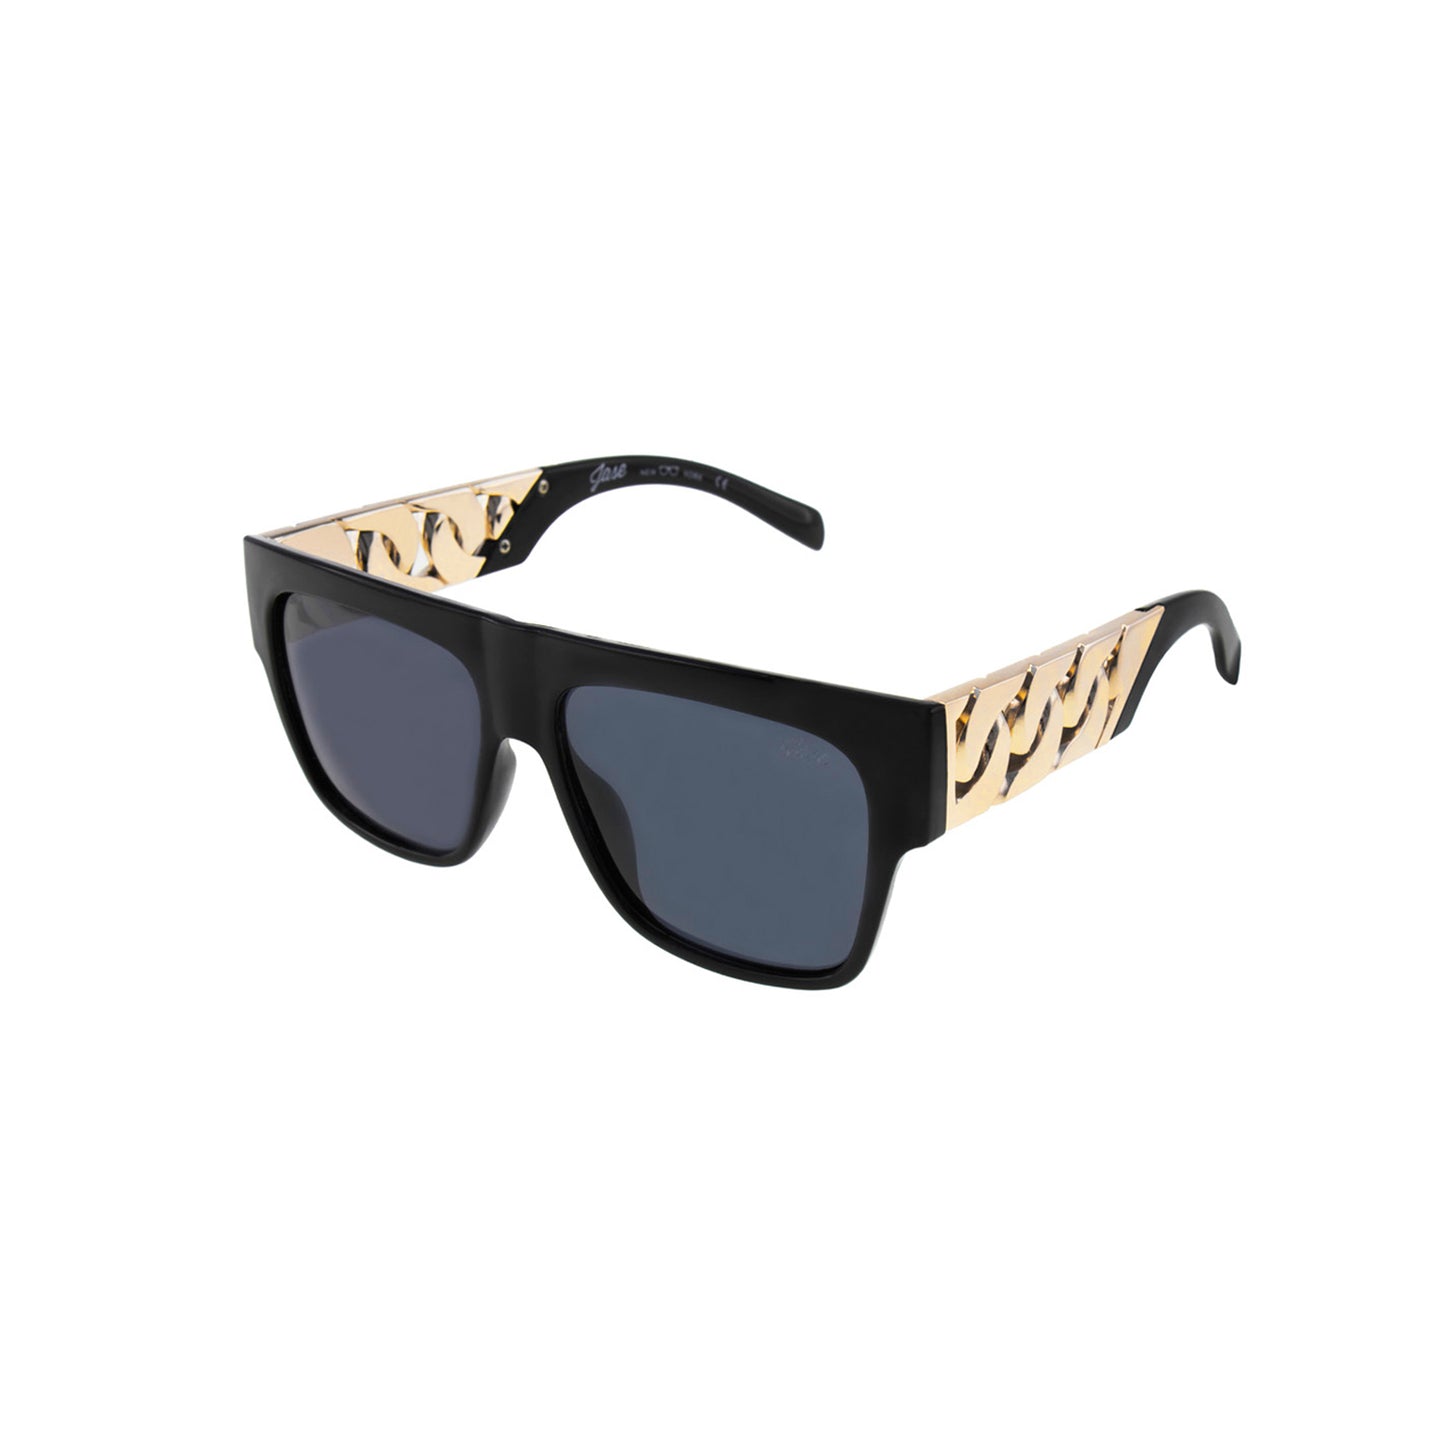 Jase New York Cache Sunglasses in Gloss Black